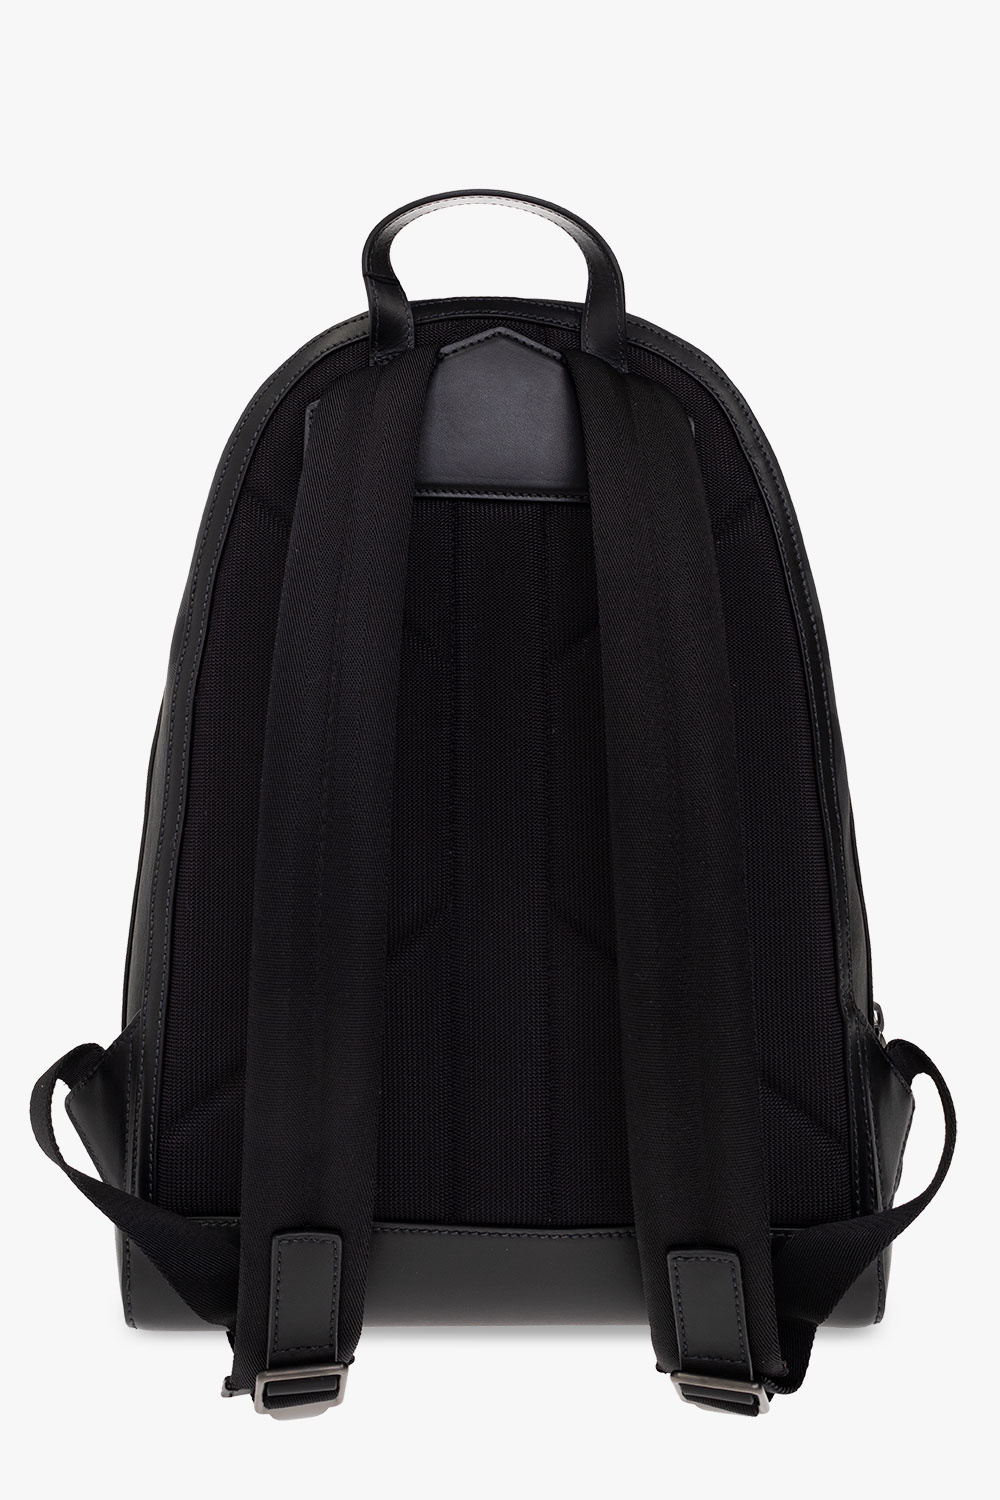 Burberry ‘Rocco’ backpack | Men's Bags | Vitkac